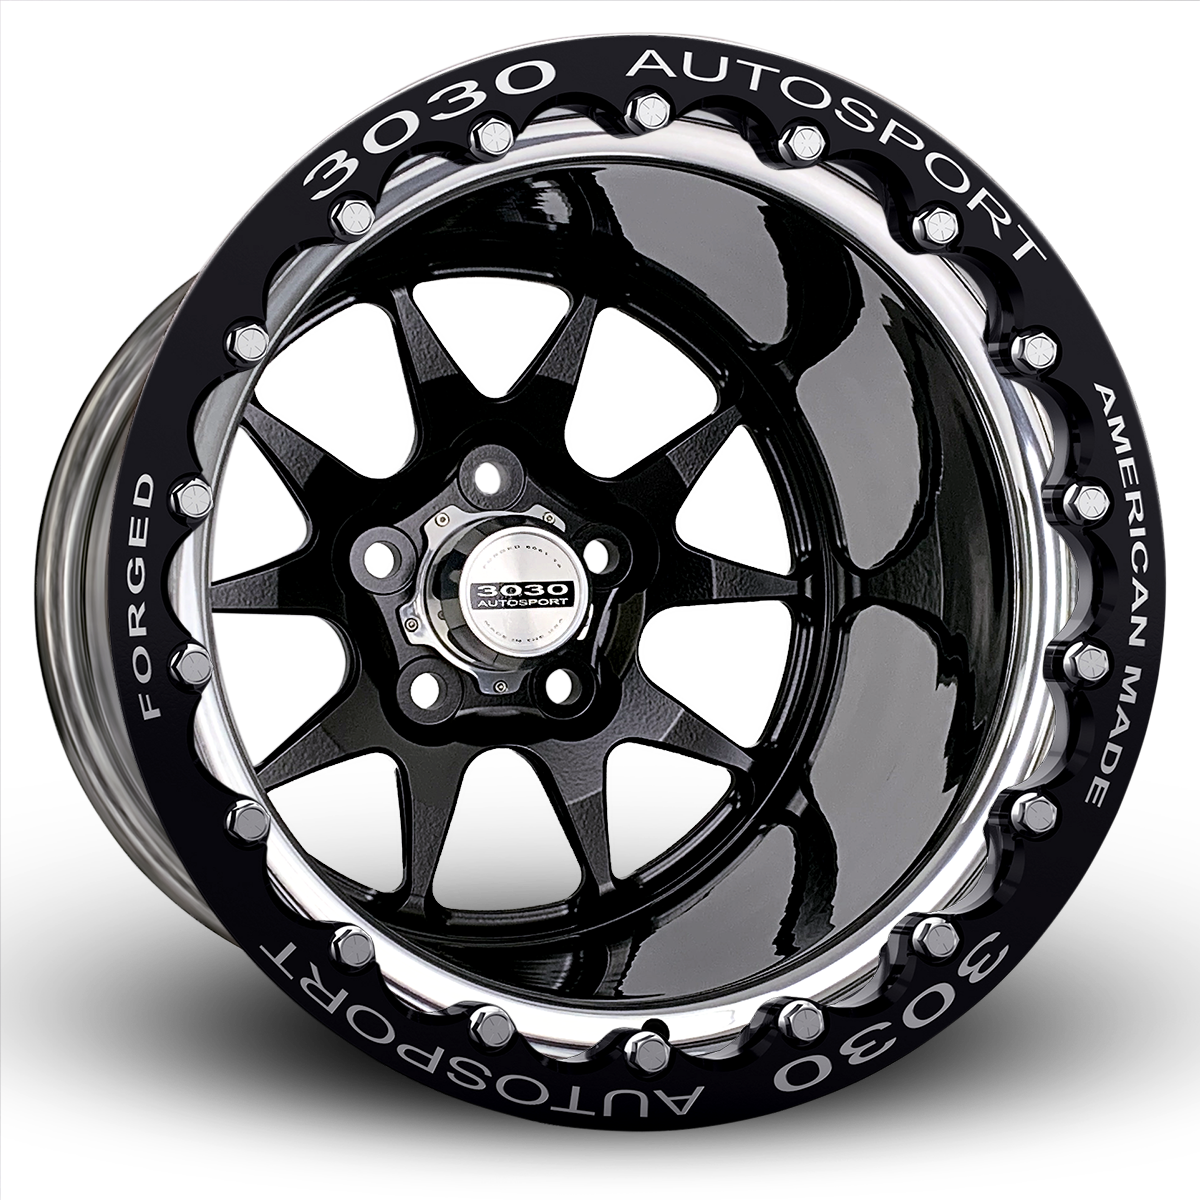 MACH-10 Double-Beadlock Wheel, Size: 15x12", Bolt Pattern: 5x4.75", Backspace: 6" [Black/Polished]